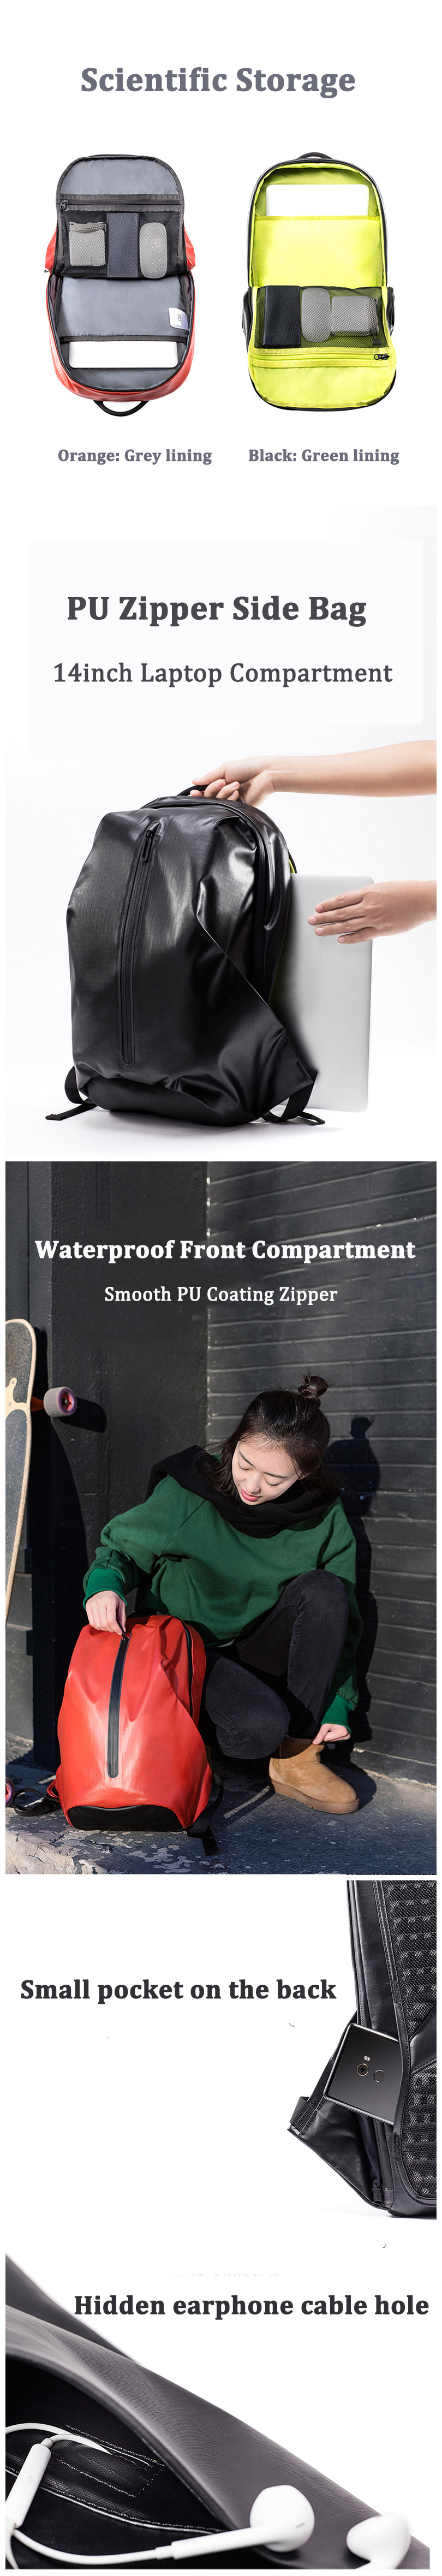 Original Xiaomi 90 18L Waterproof City Backpack 14inch Laptop Travel Shoulder Bag Rucksack